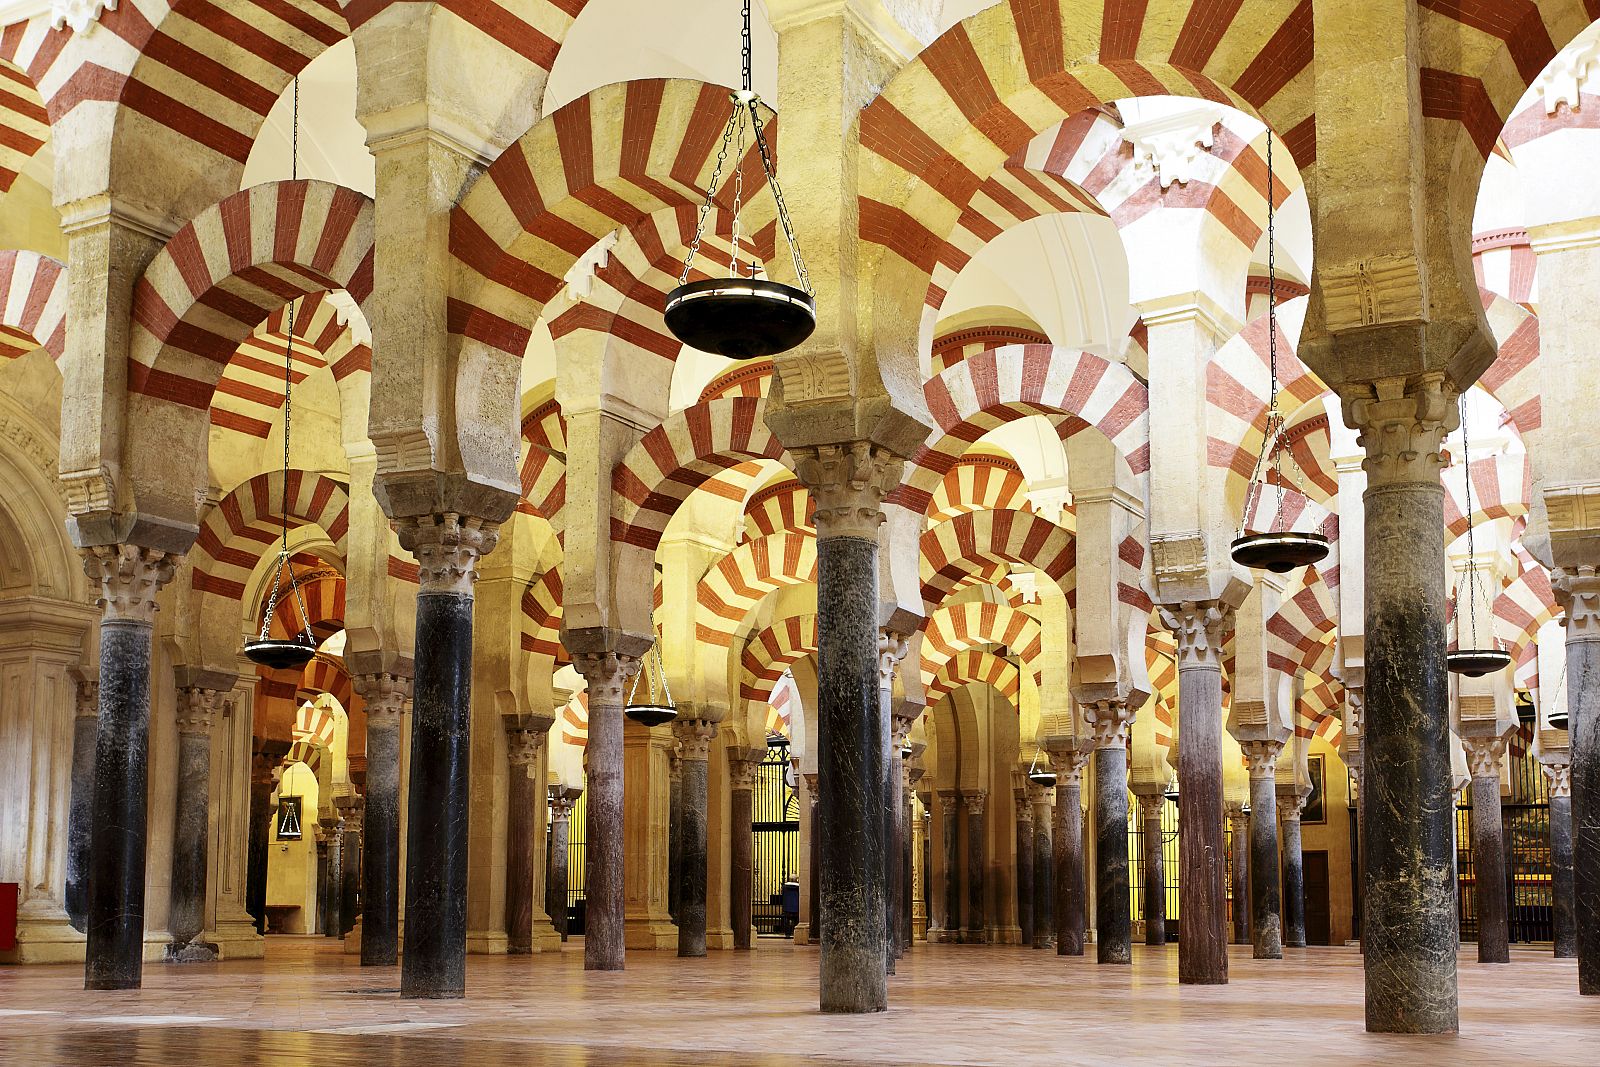 Imagen de la mezquita de Córdoba.